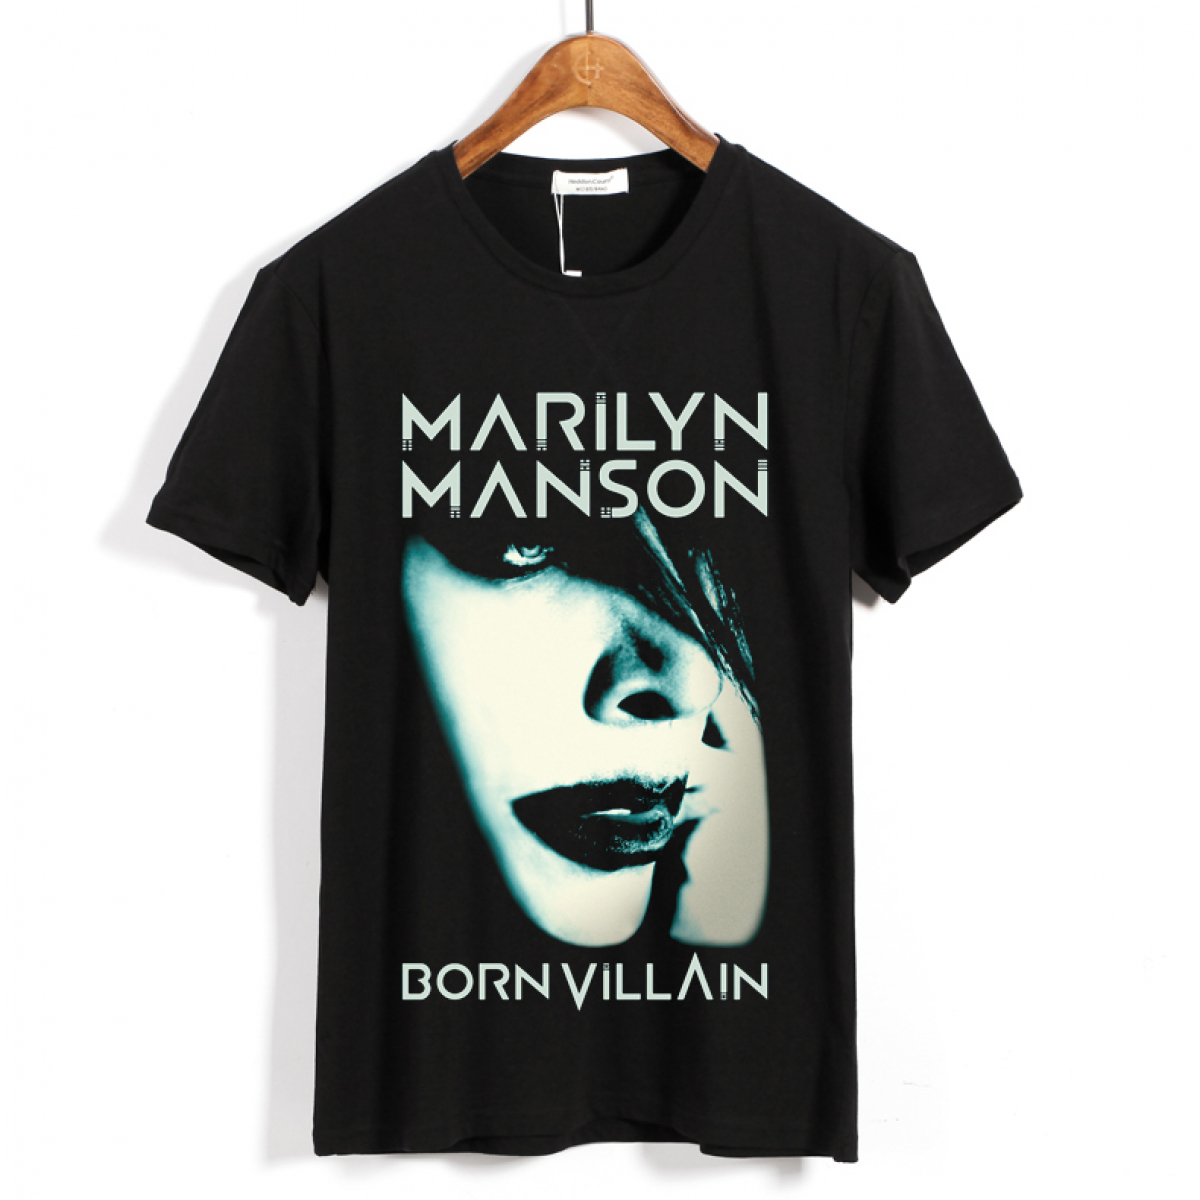 Marilyn Manson Villain Cruel World Tour 2012 RI-OH Black T Shirt New Official 